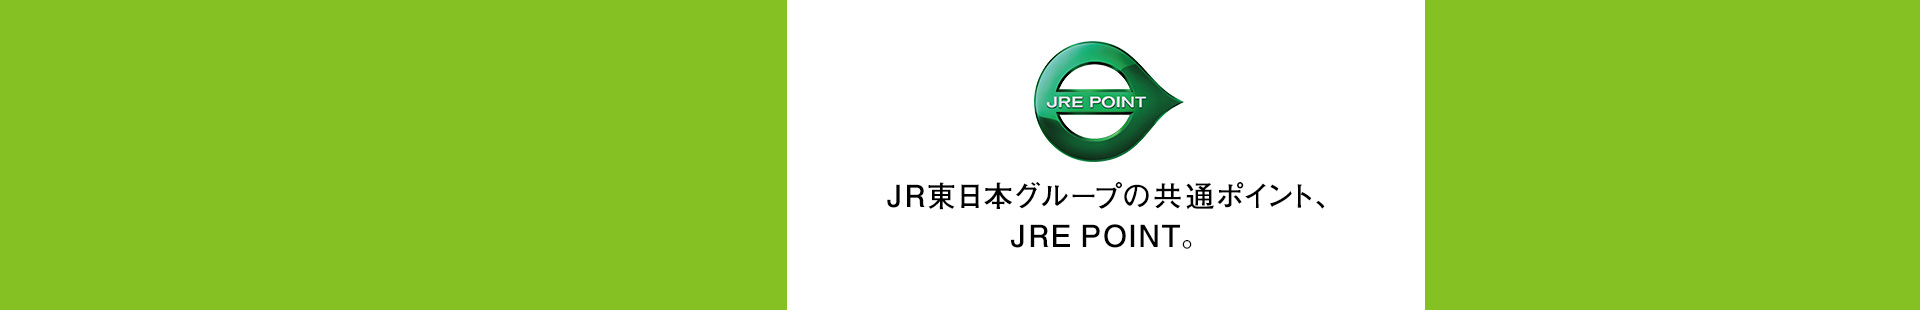 JR東日本グループの共通ポイント、JRE POINT。